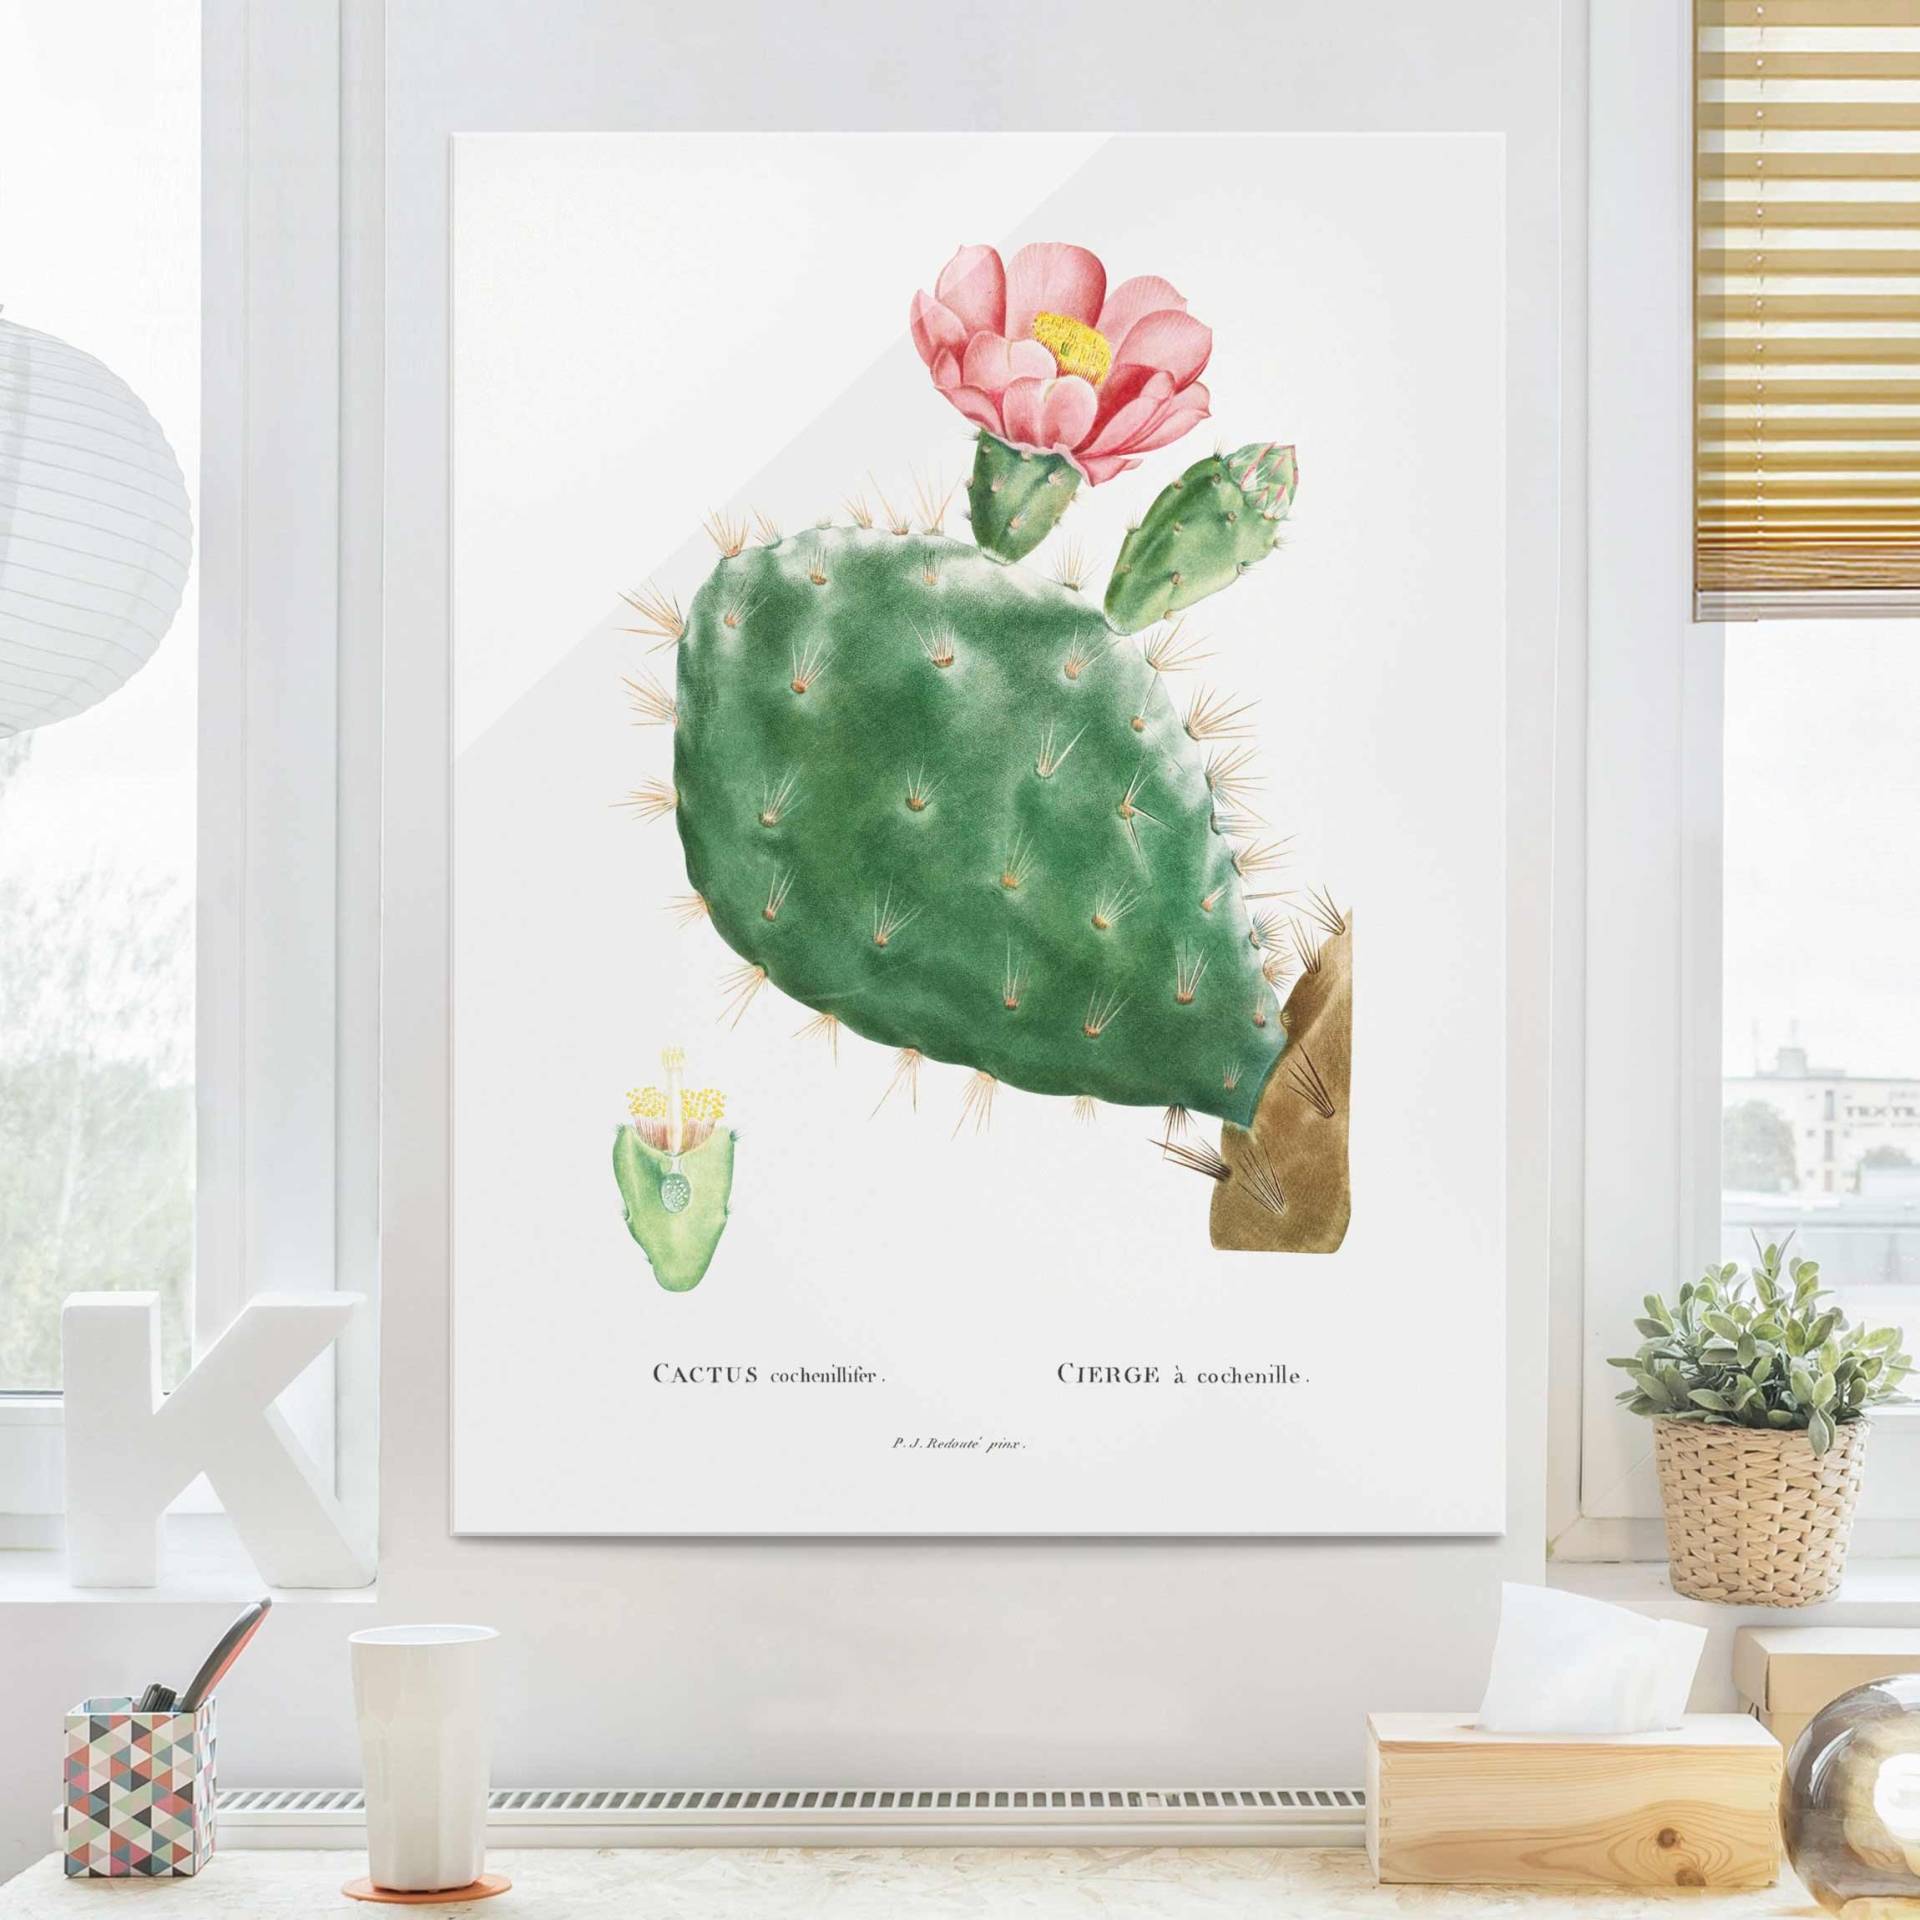 Glasbild Botanik Vintage Illustration Kaktus Rosa Blüte von Klebefieber